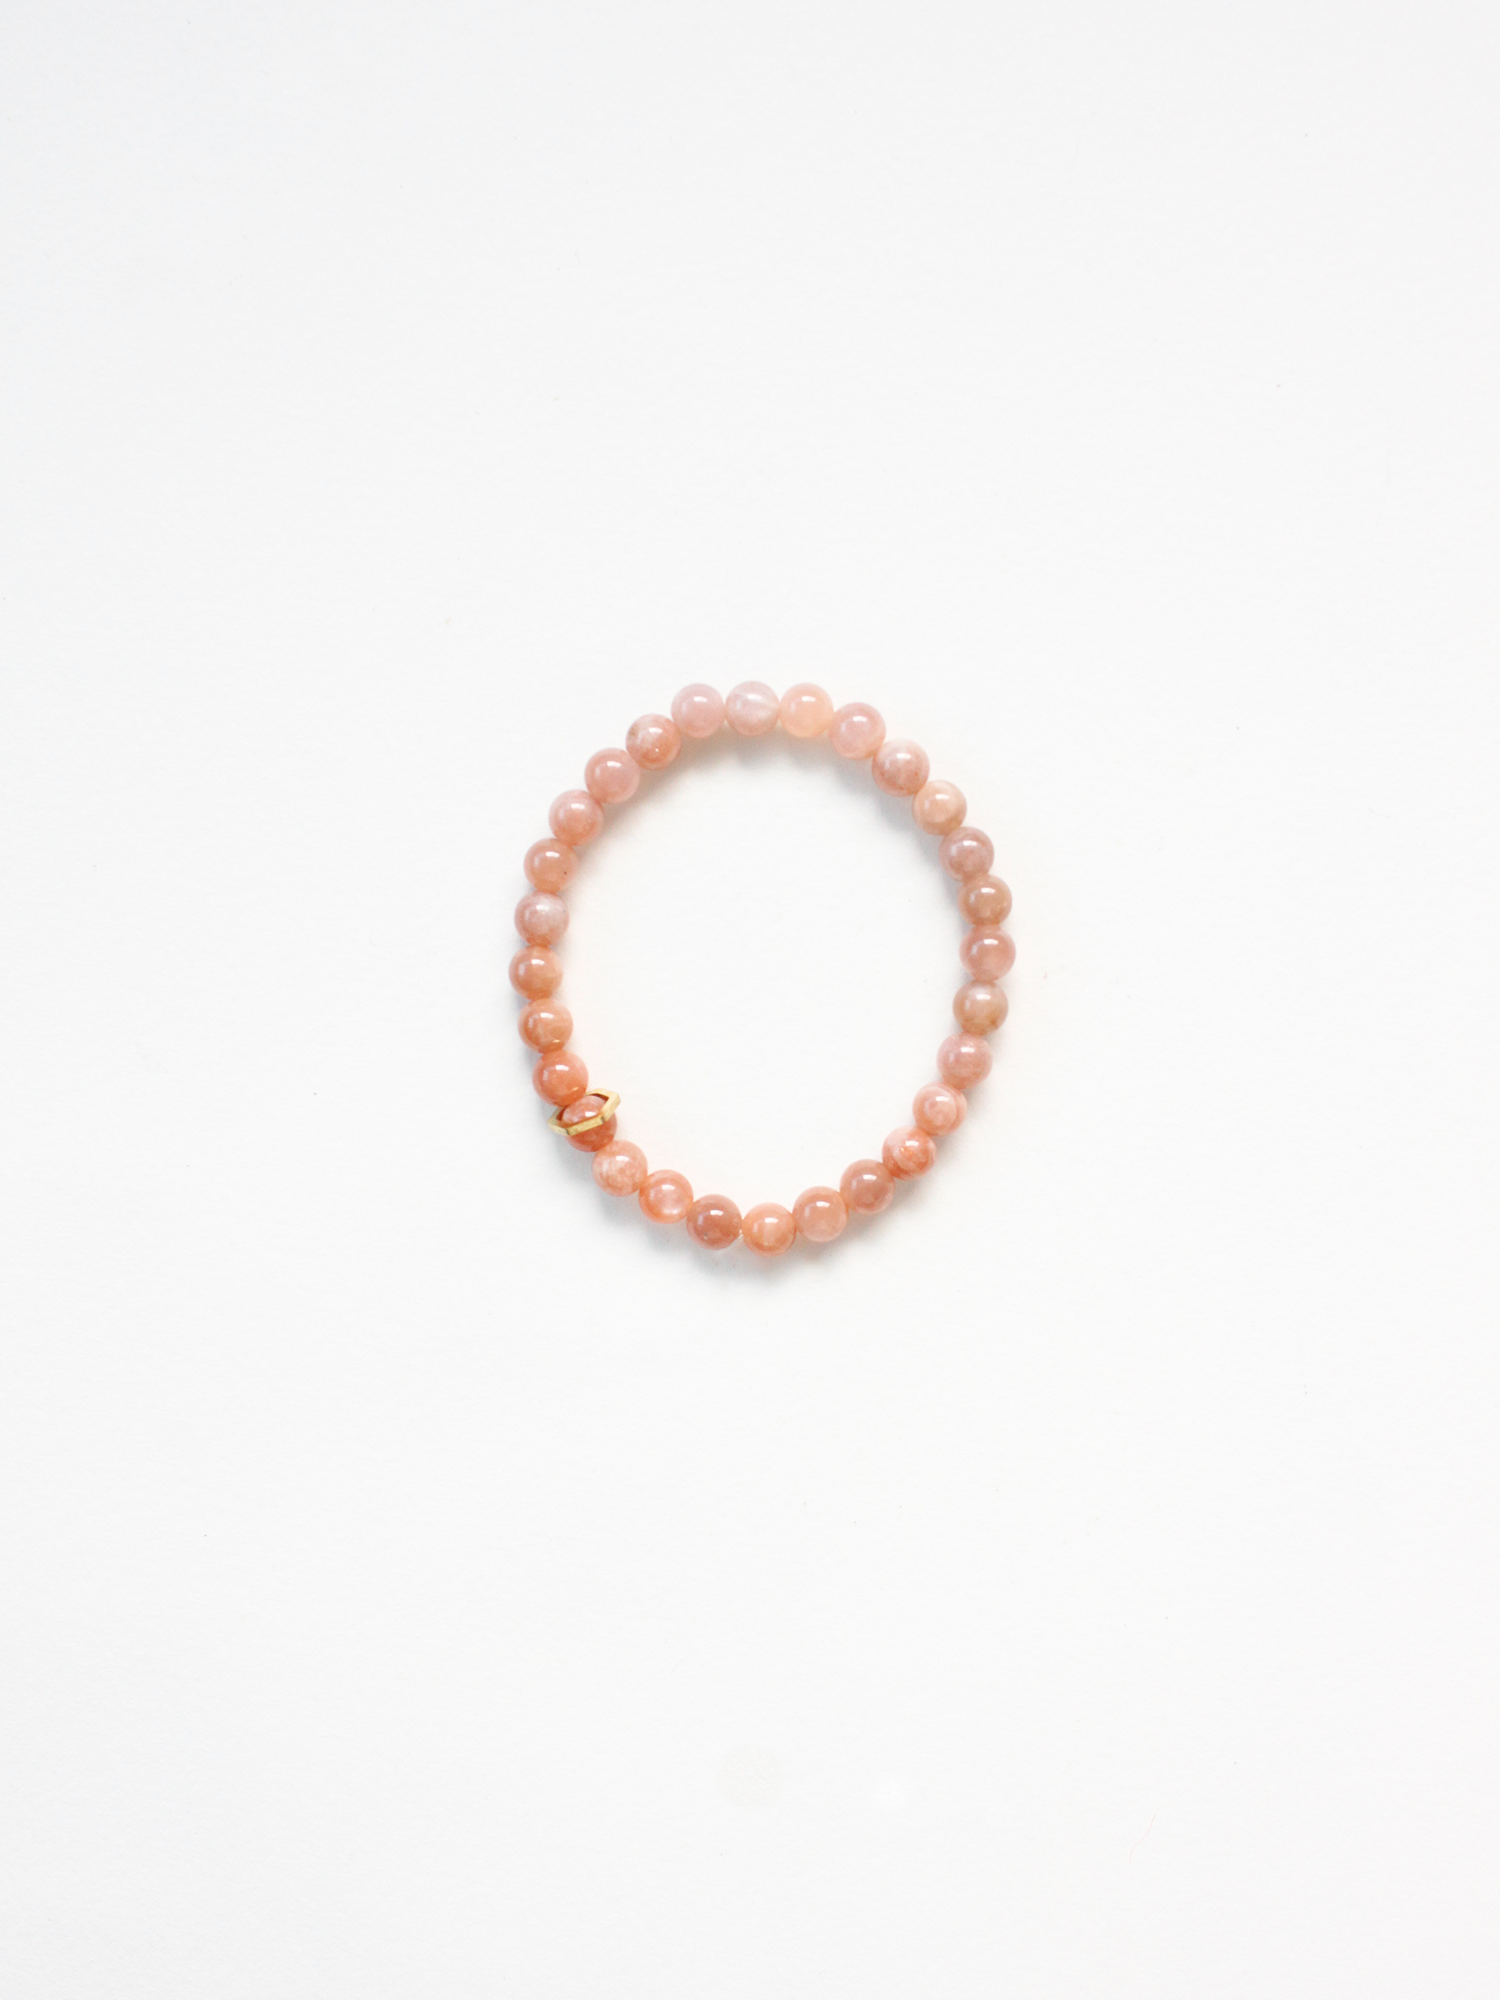 Stone Bracelet - Peach Moonstone 6mm